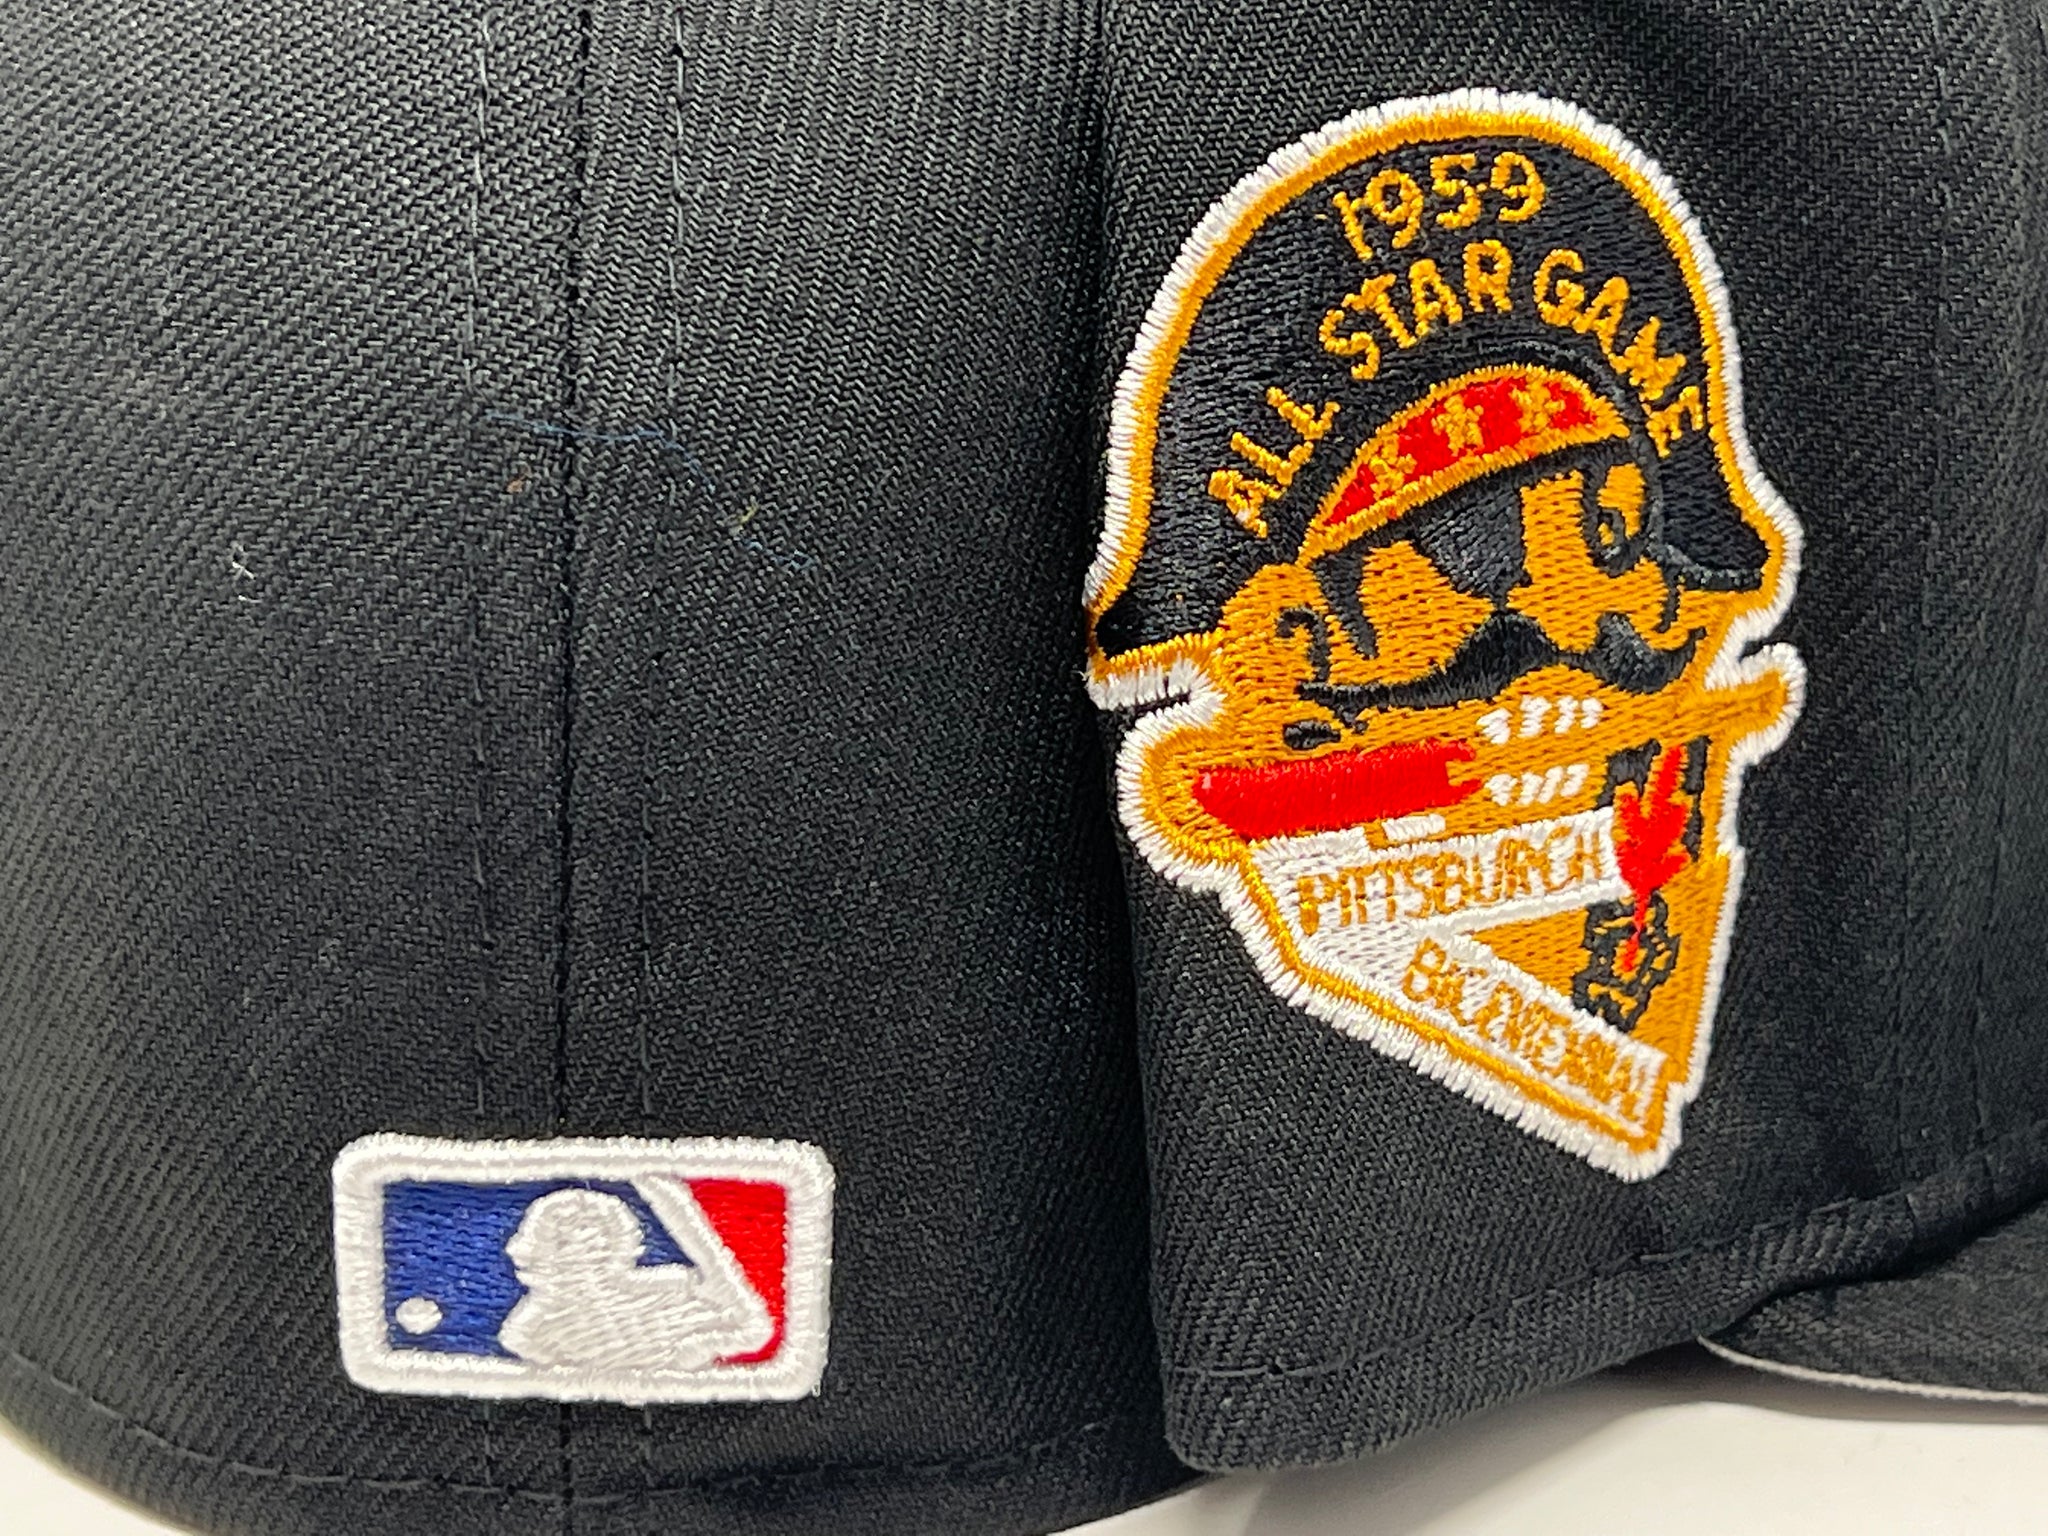 Pittsburgh Pirates 1959 All Star Game New Era 59FIFTY Fitted Hat (GITD Chrome White Dark Seaweed Khaki Under BRIM) 7 1/4